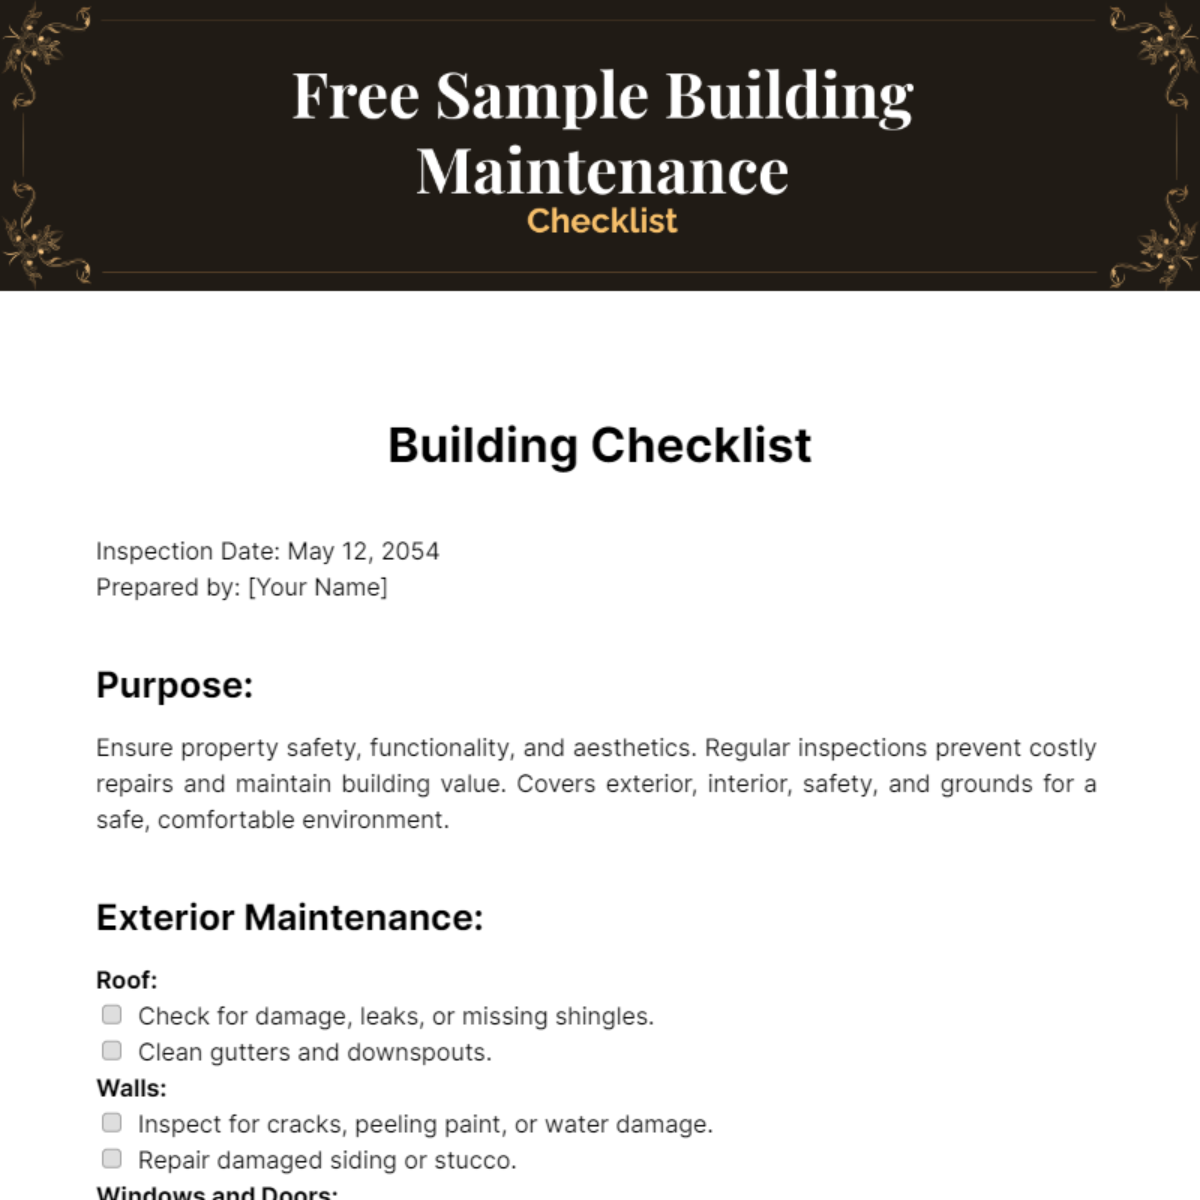 Free Sample Building Maintenance Checklist Template